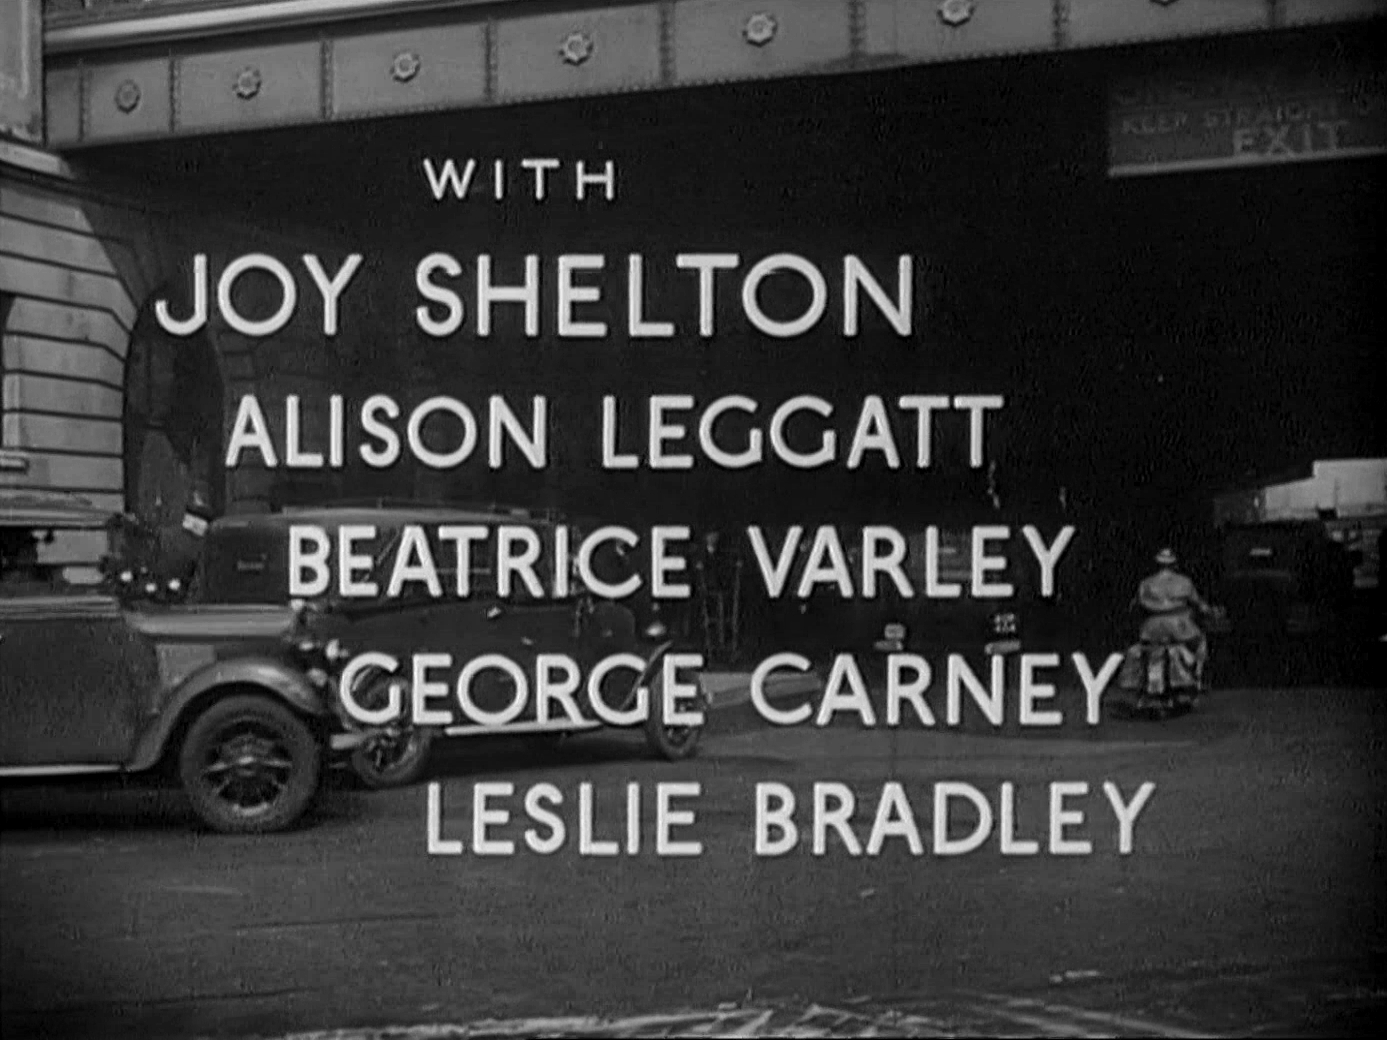 Main title from Waterloo Road (1945) (6). With Joy Shelton, Alison Leggatt, Beatrice Varley, George Carney, Leslie Bradley